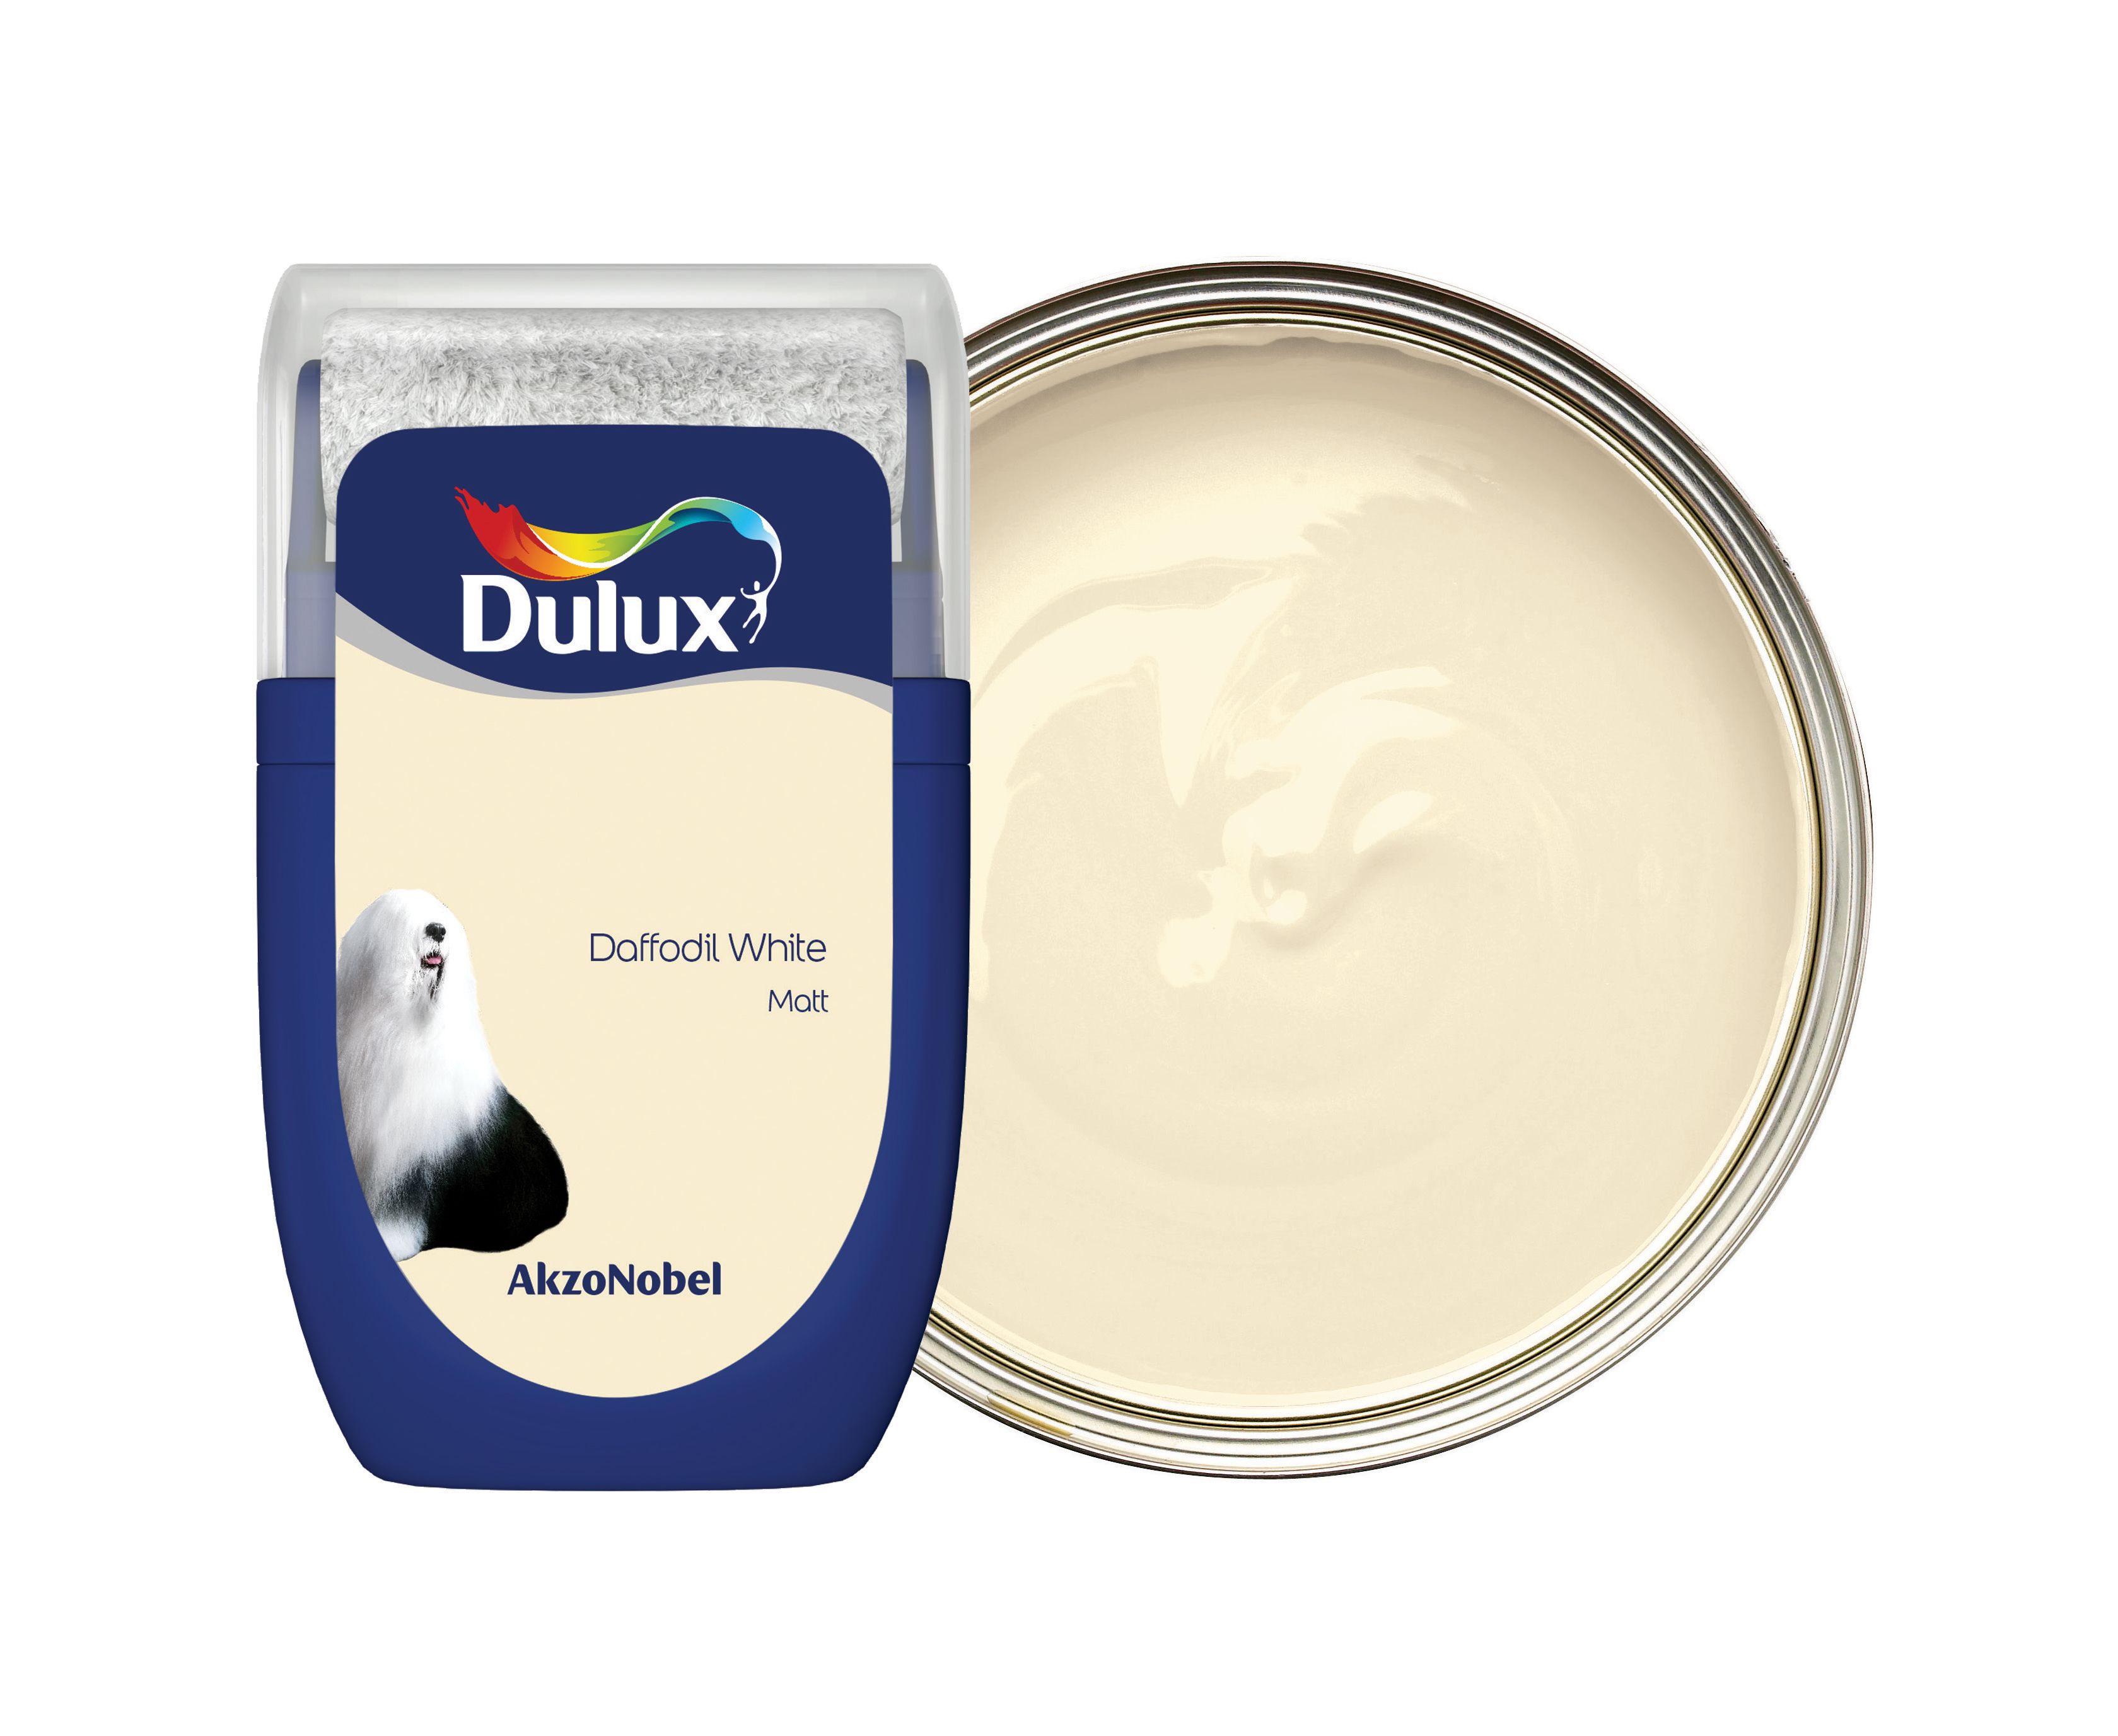 Image of Dulux Emulsion Paint - Daffodil White Tester Pot - 30ml